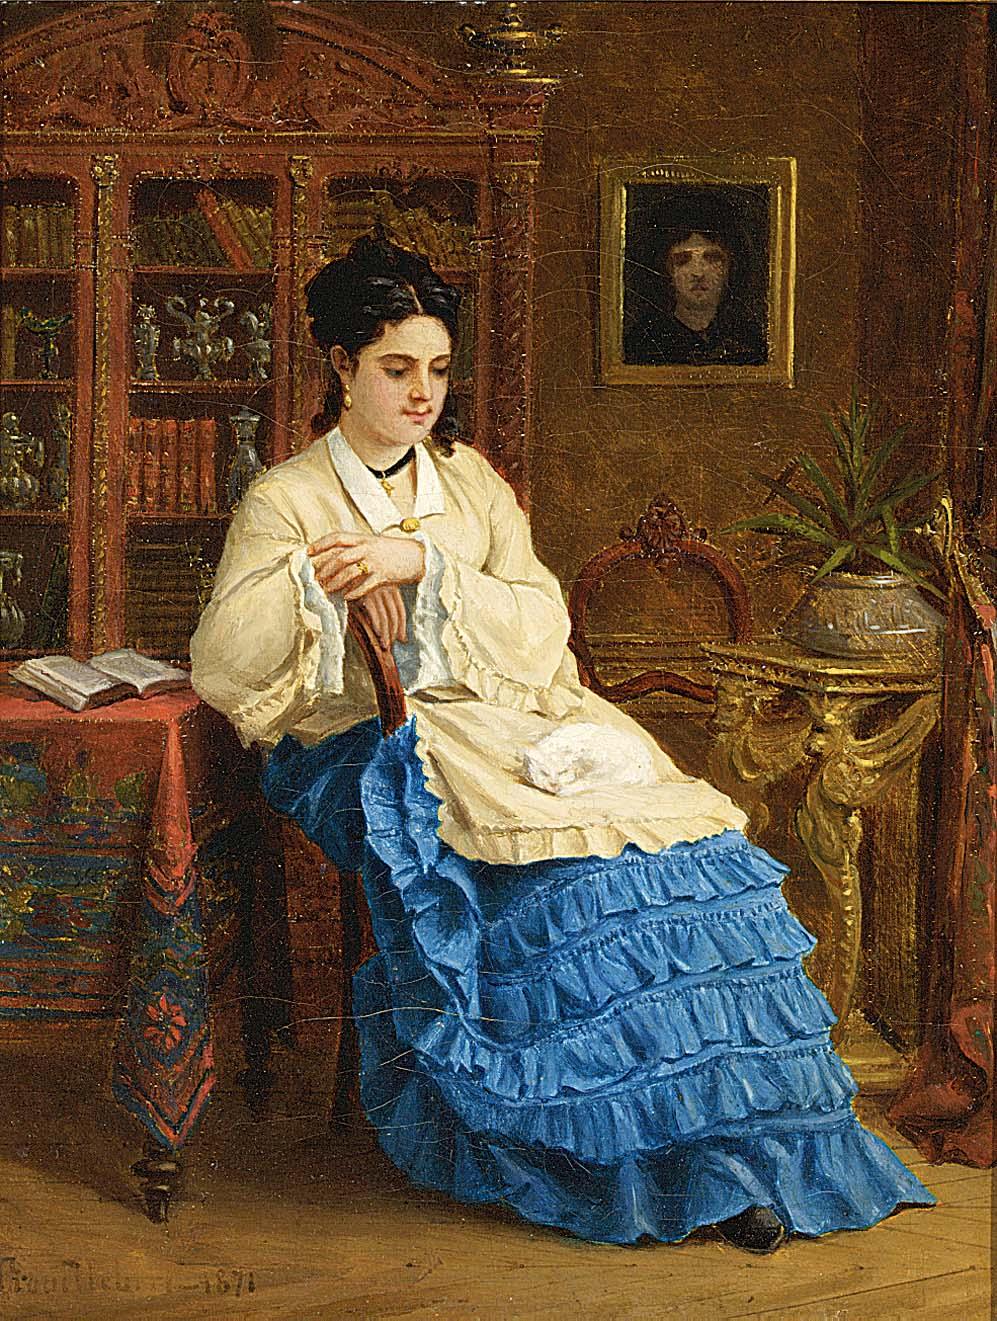 Femme en robe bleue revant by Paul Desire Trouillebert-French Painting